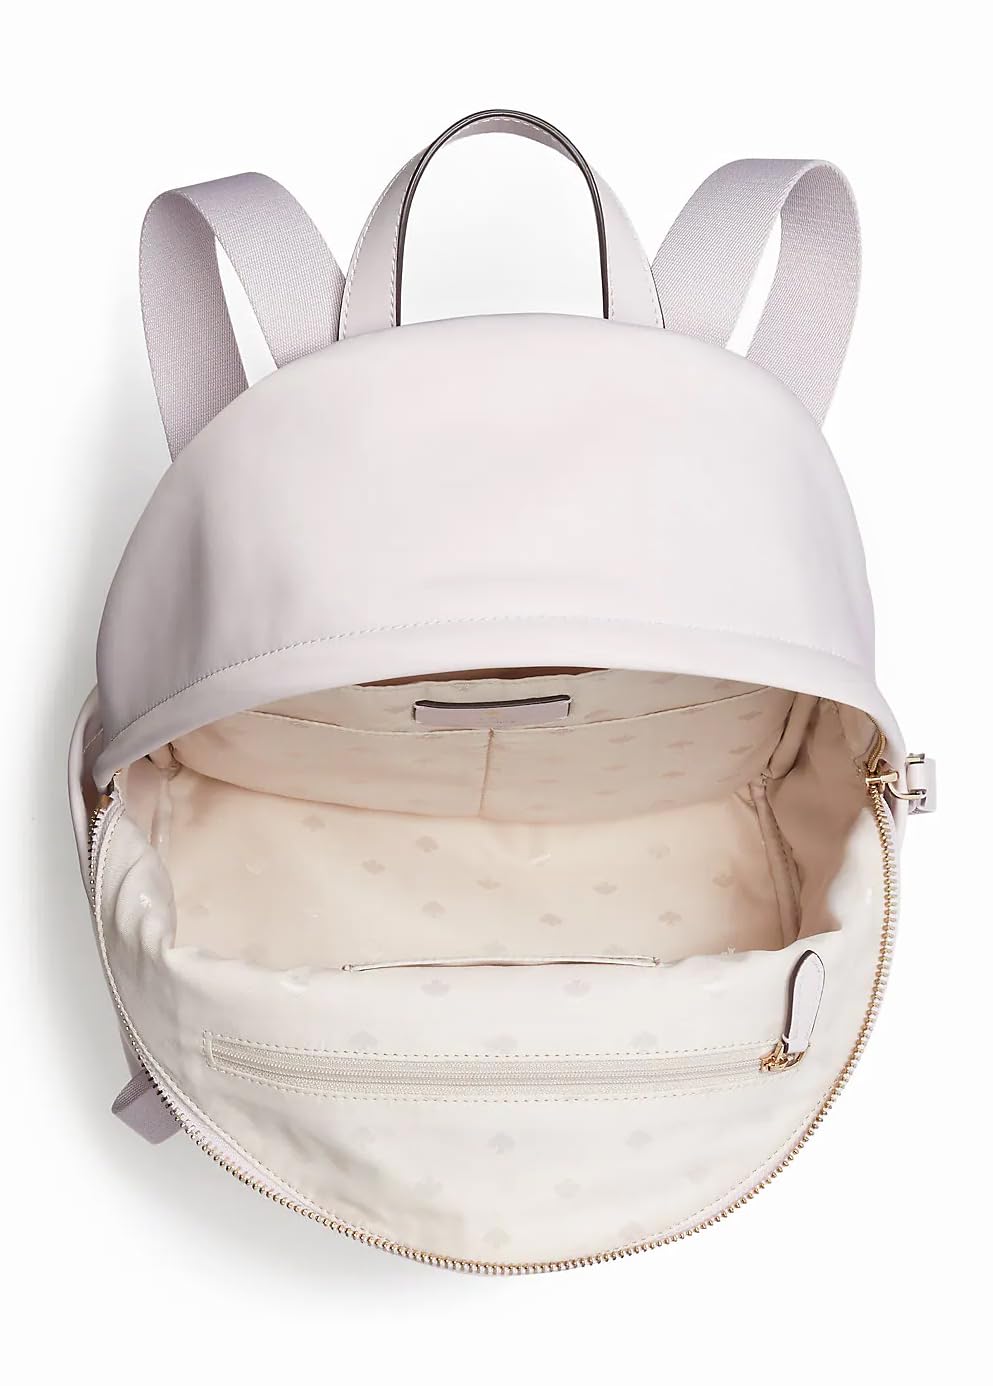 Kate Spade New York Chelsea Medium Nylon Backpack, Lilac Moonlight